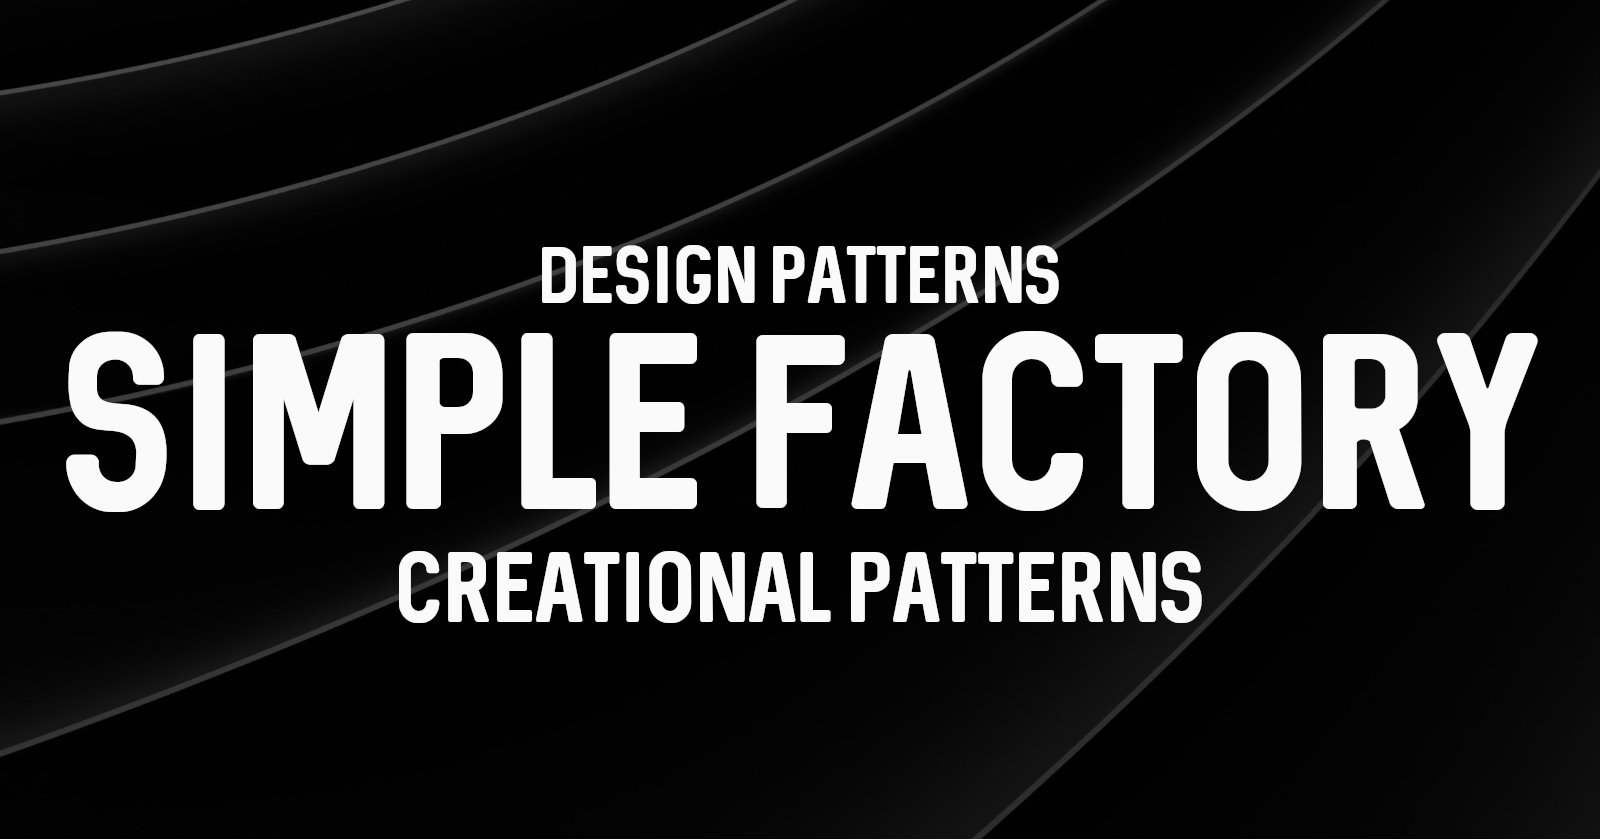 Understanding the Simple Factory Design Pattern